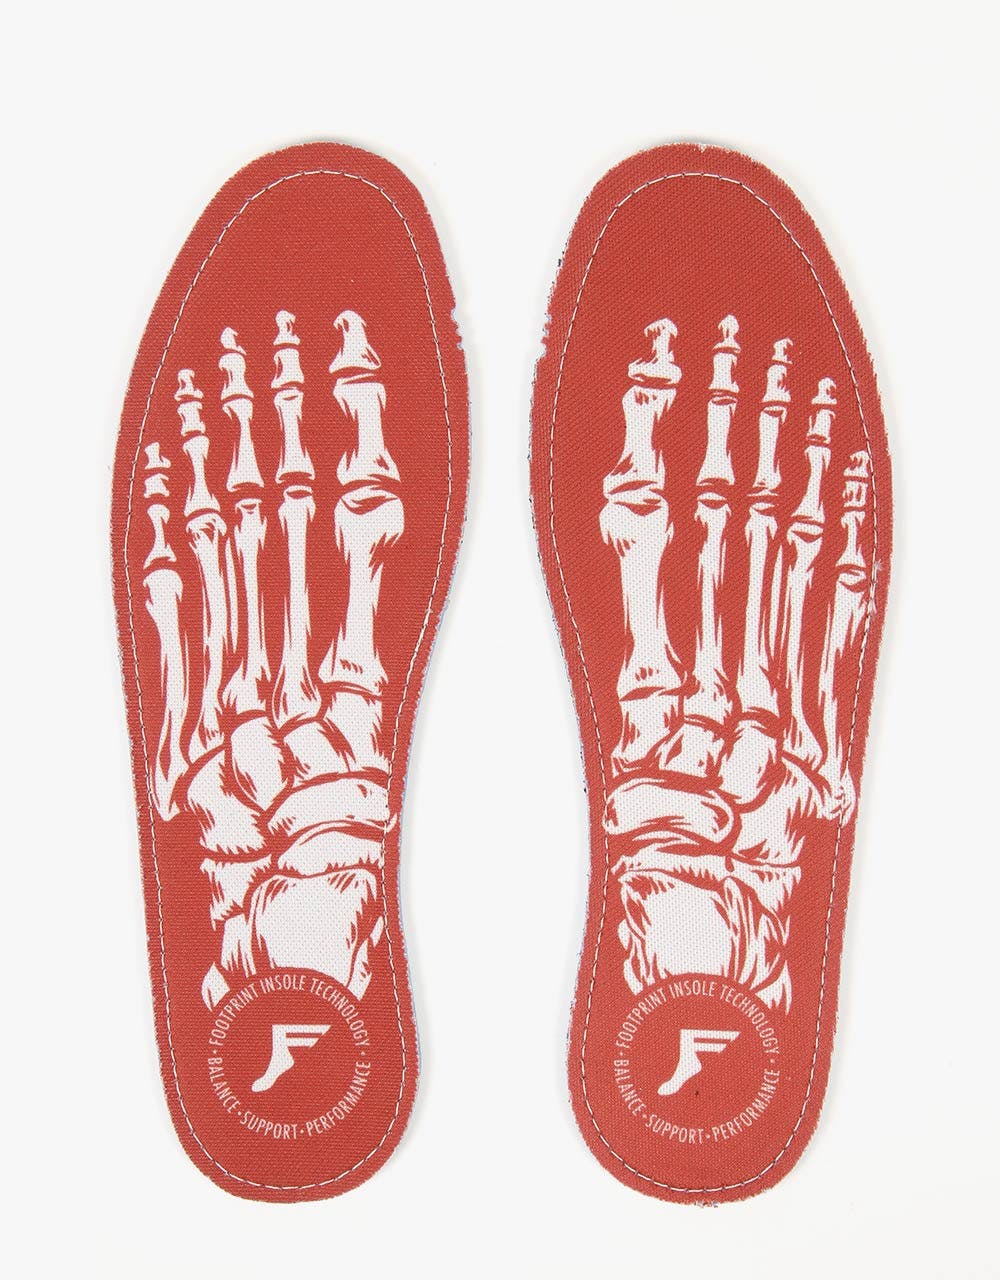 Footprint Skeleton 5mm Flat Insoles